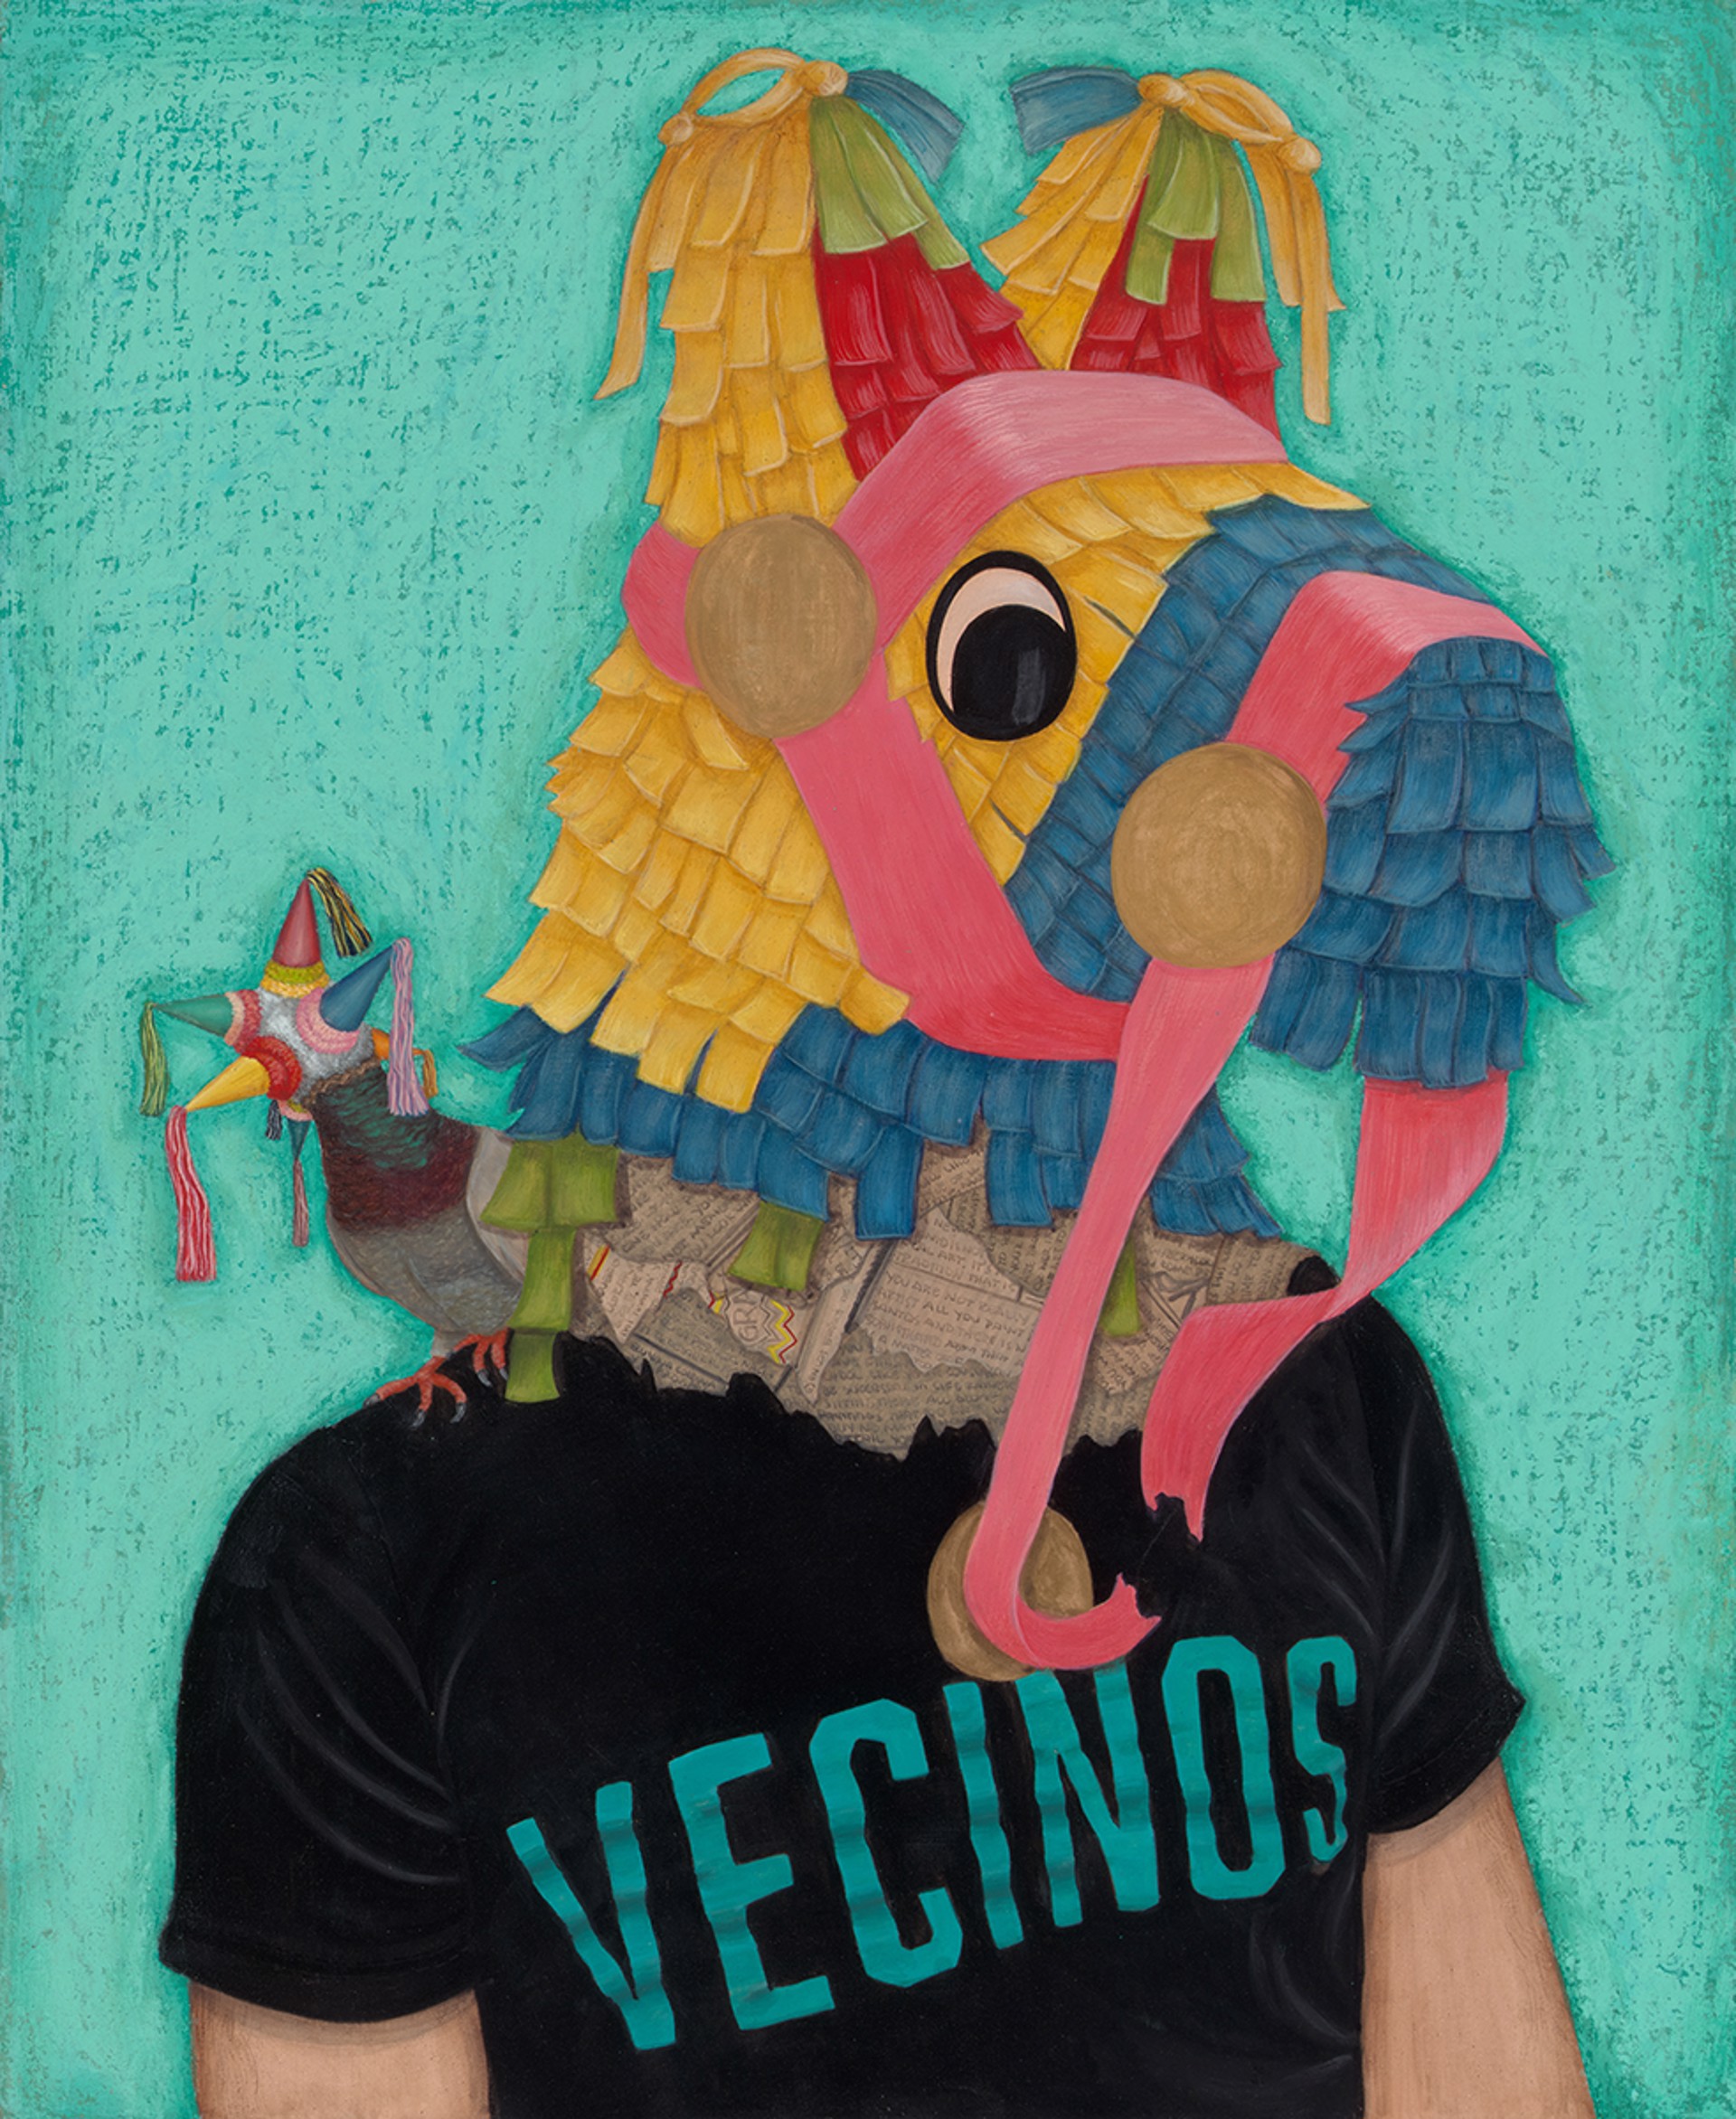 Mi Amigo the Pigeon by Vicente Telles